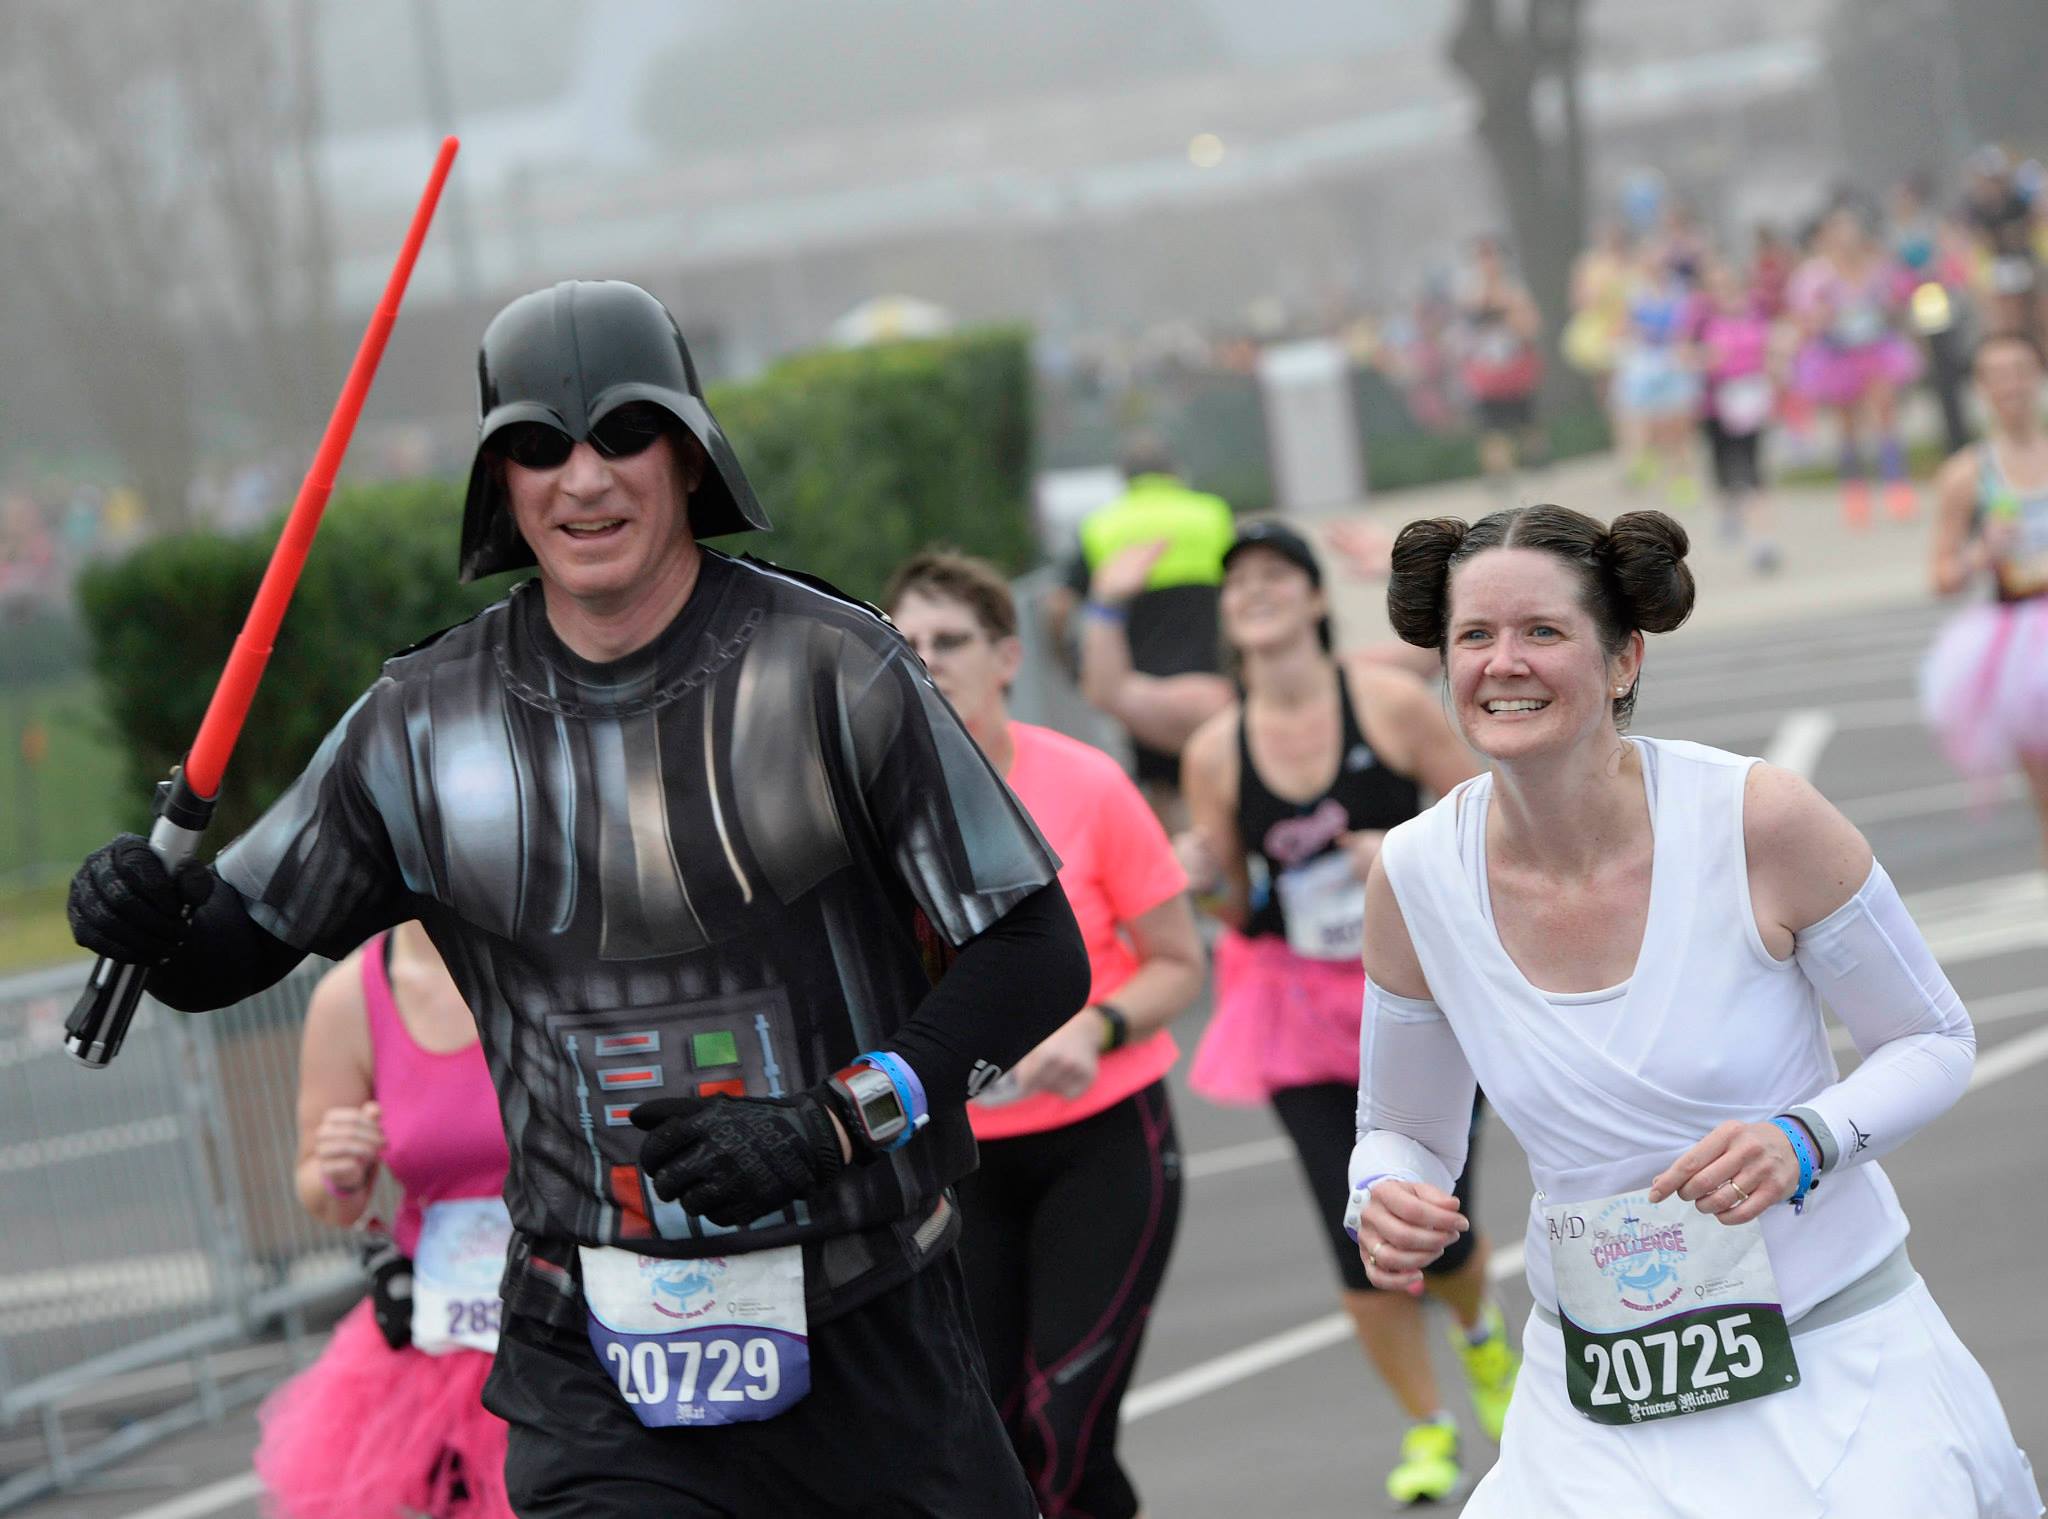 Registration opens today for Star Wars Half Marathon Weekend presented by Sierra Nevada